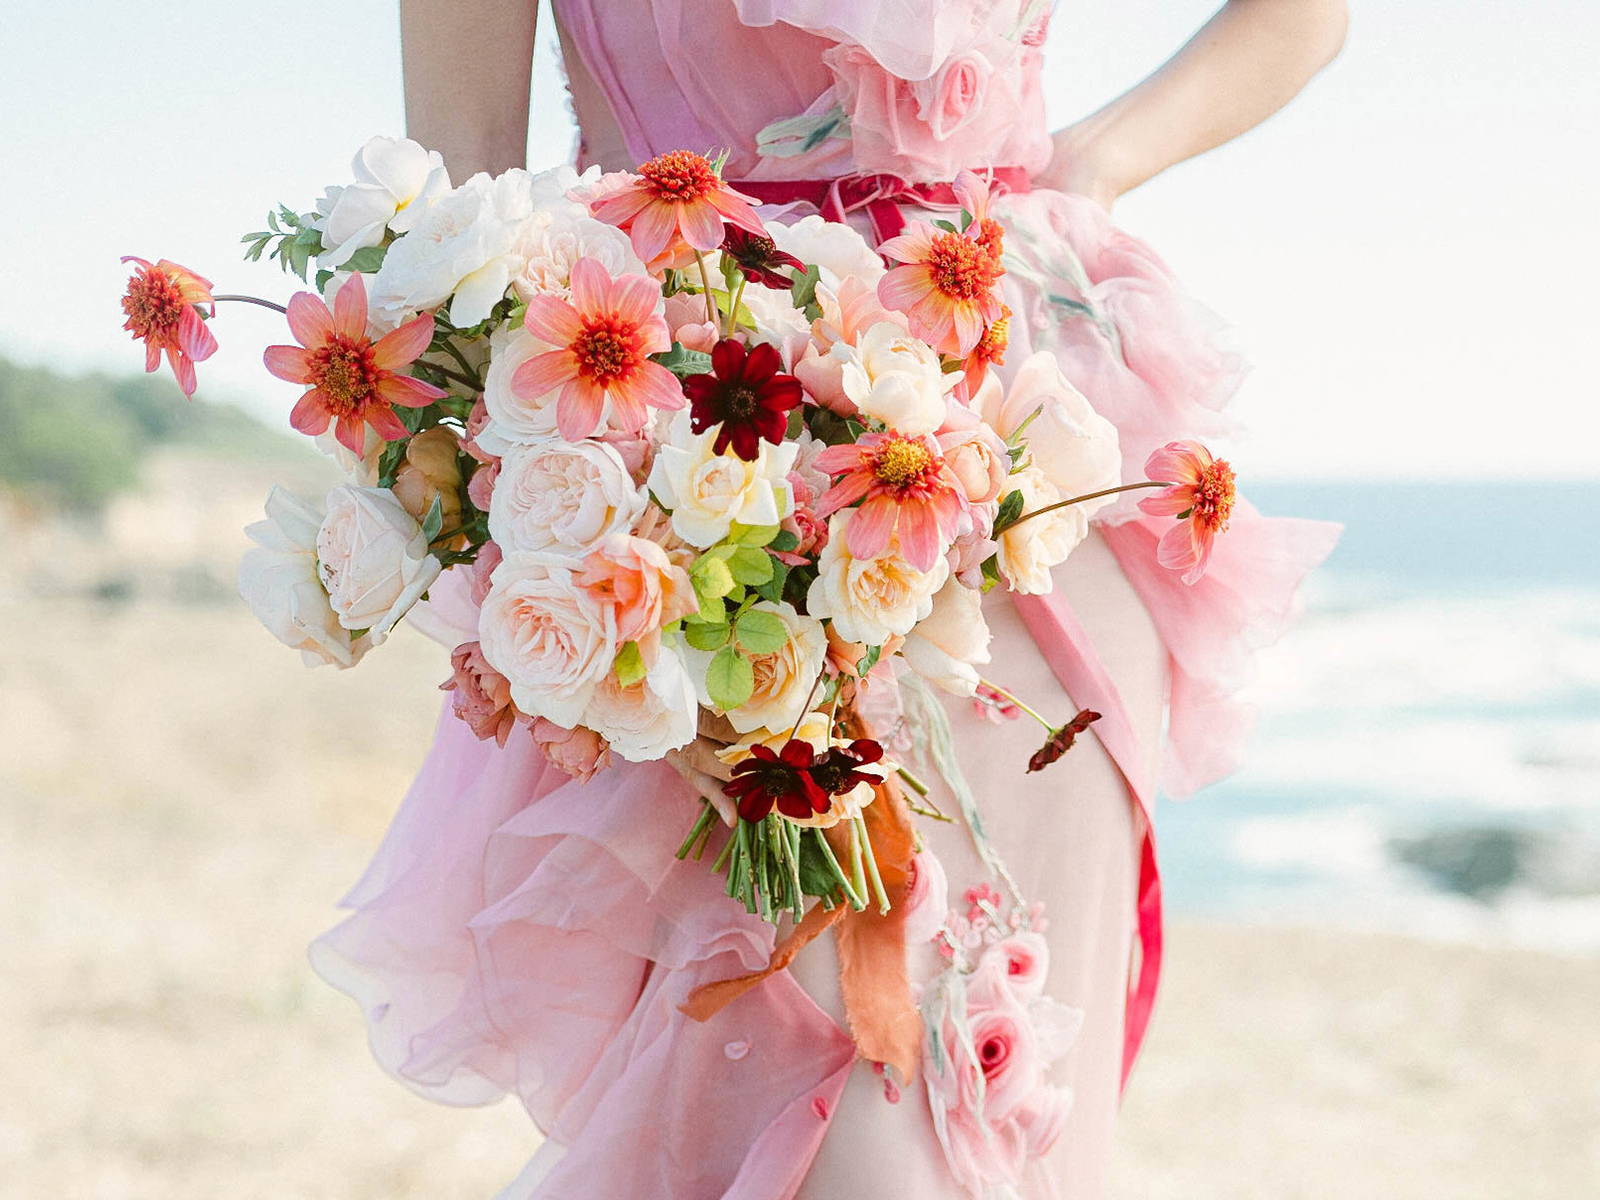 REFINED x KT Merry: Pink Dress & Flowers